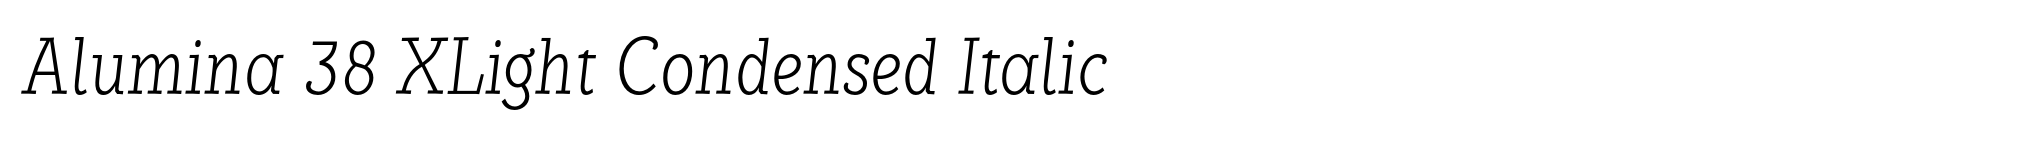 Alumina 38 XLight Condensed Italic image